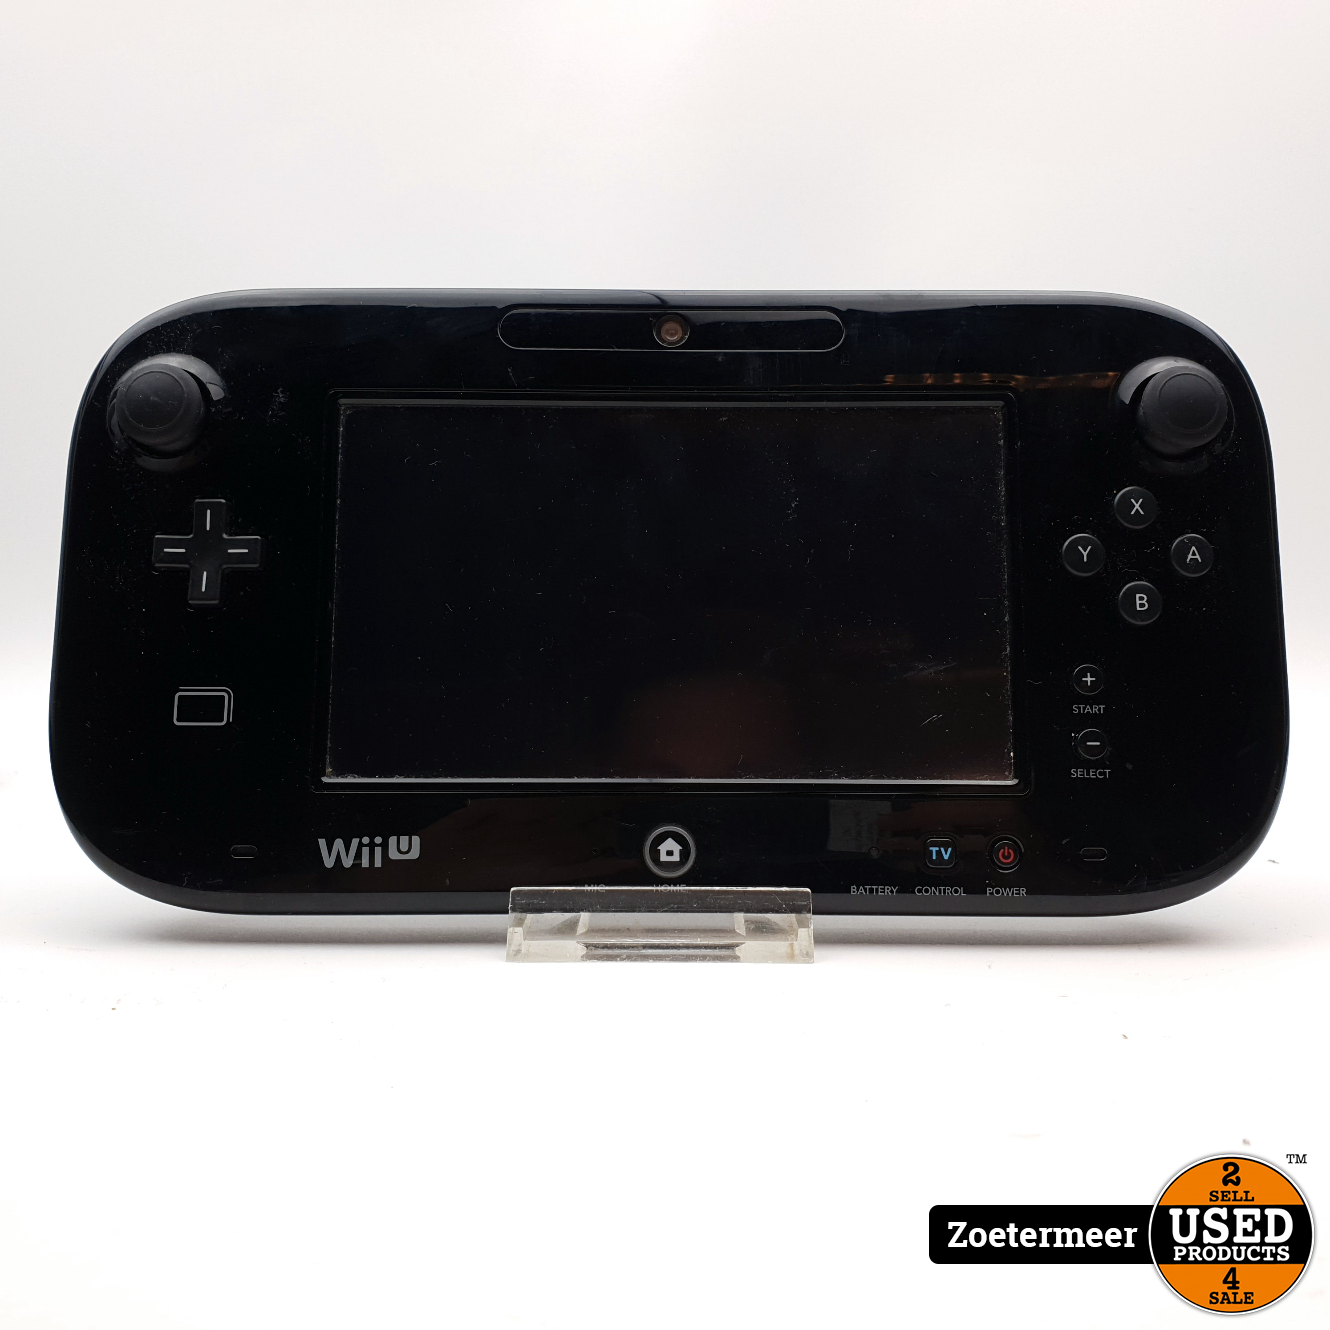 Smelten Ontvangst Slank Nintendo Wii U 32GB Zwart - Used Products Zoetermeer